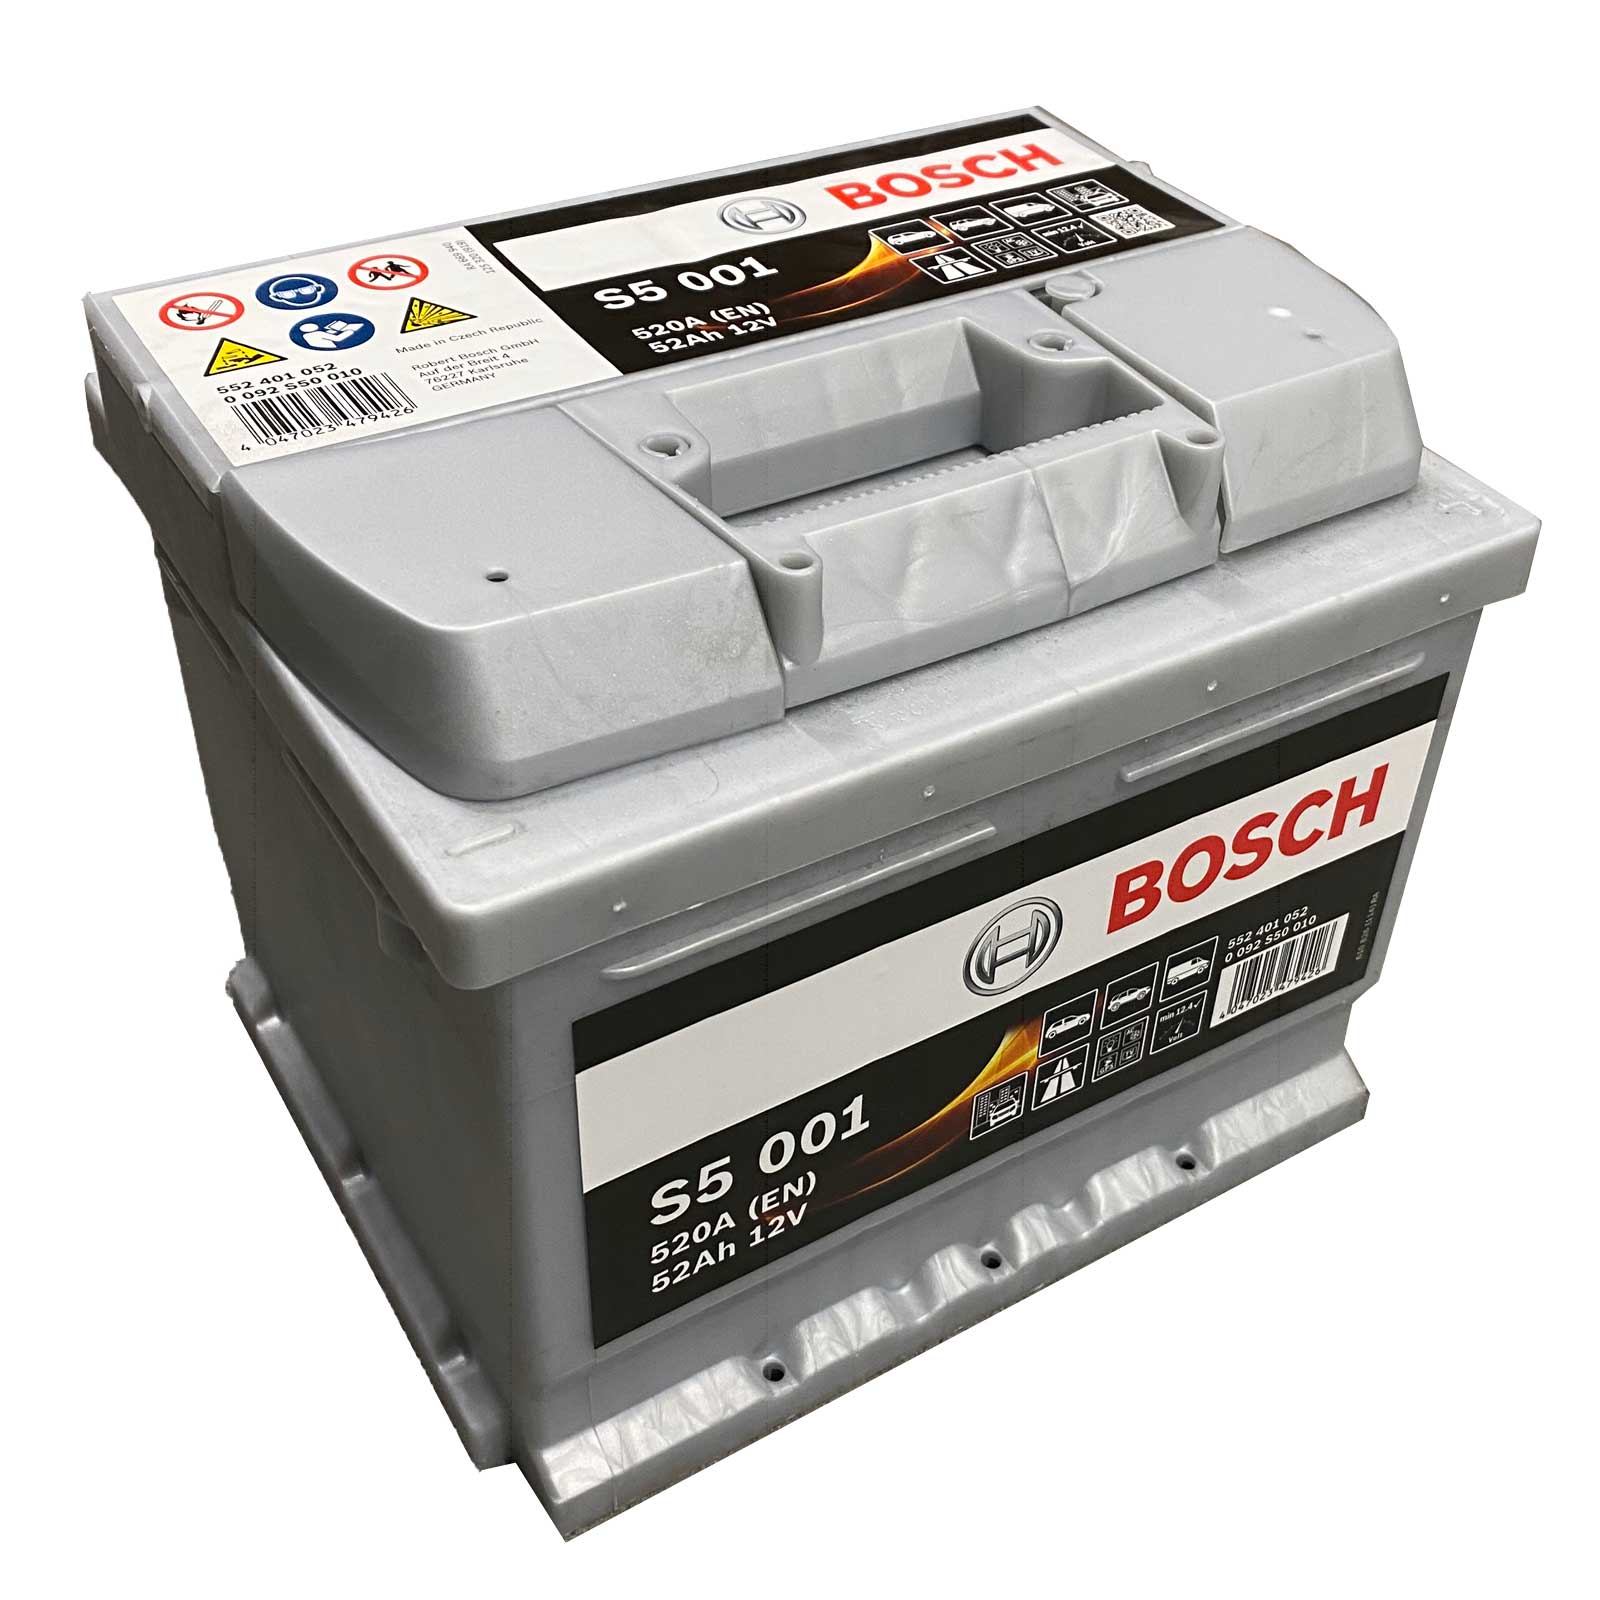 Bosch S5 001 Autobatterie 12V 52Ah 520A, Starterbatterie, Boot, Batterien für